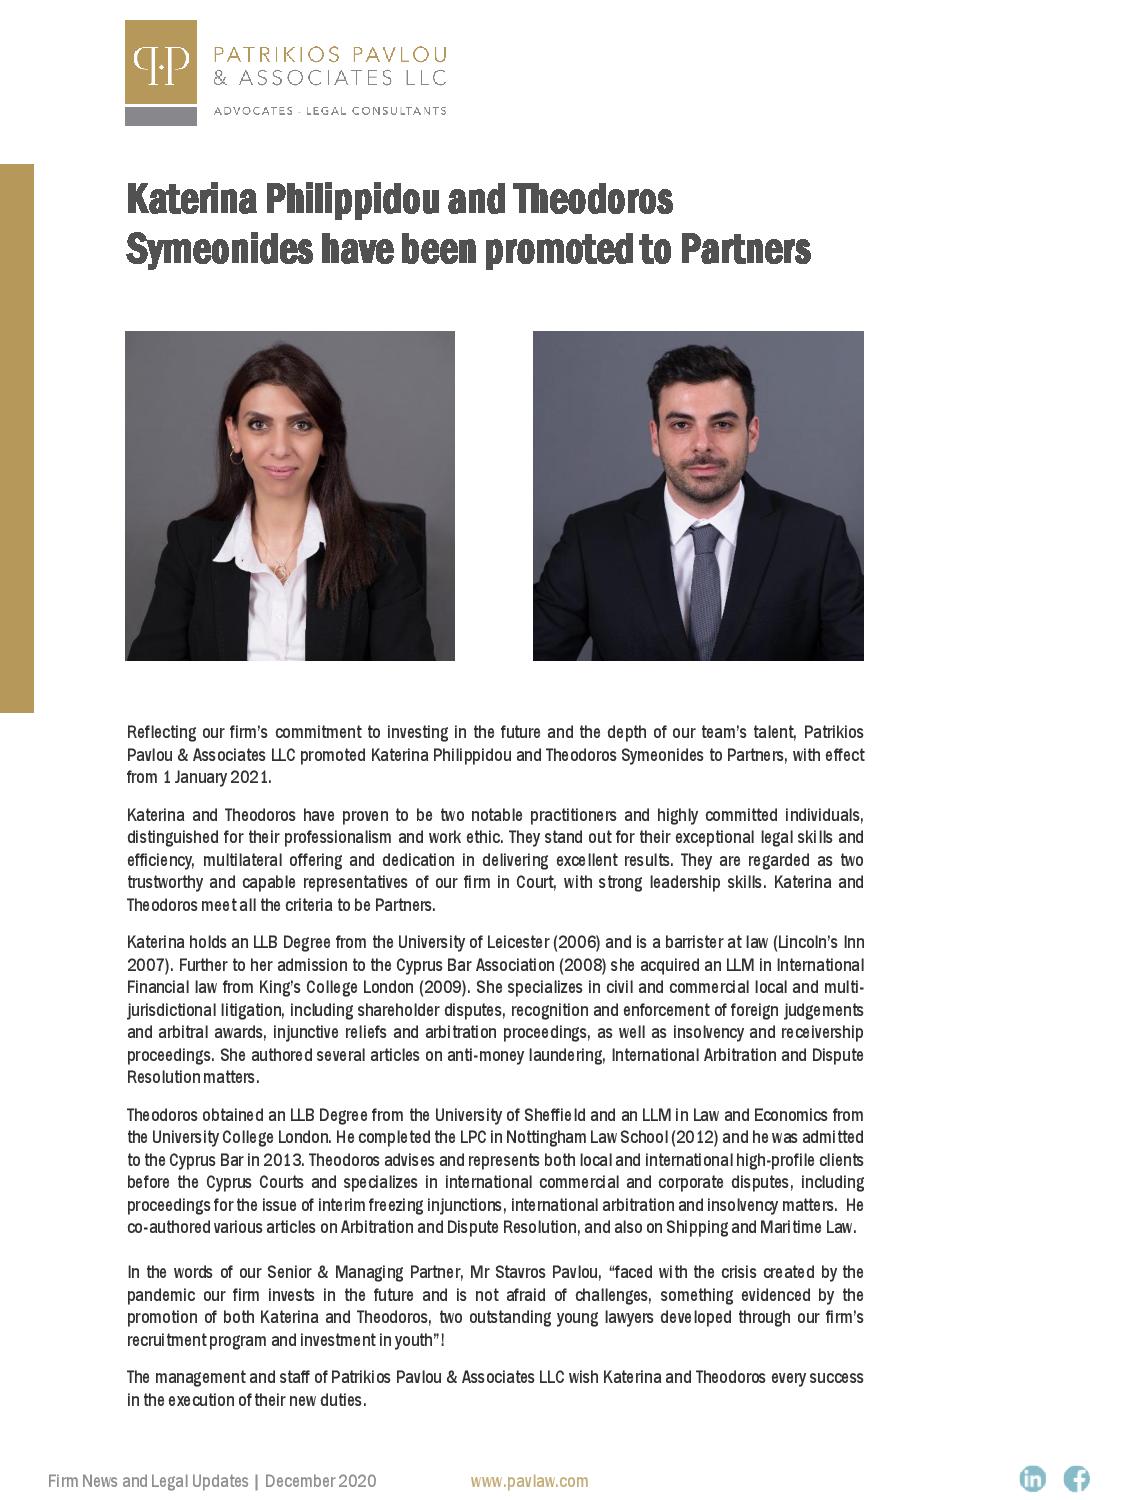 Patrikios Pavlou & Associates LLC News: Katerina Philippidou and Theodoros Symeonides have been promoted to Partners